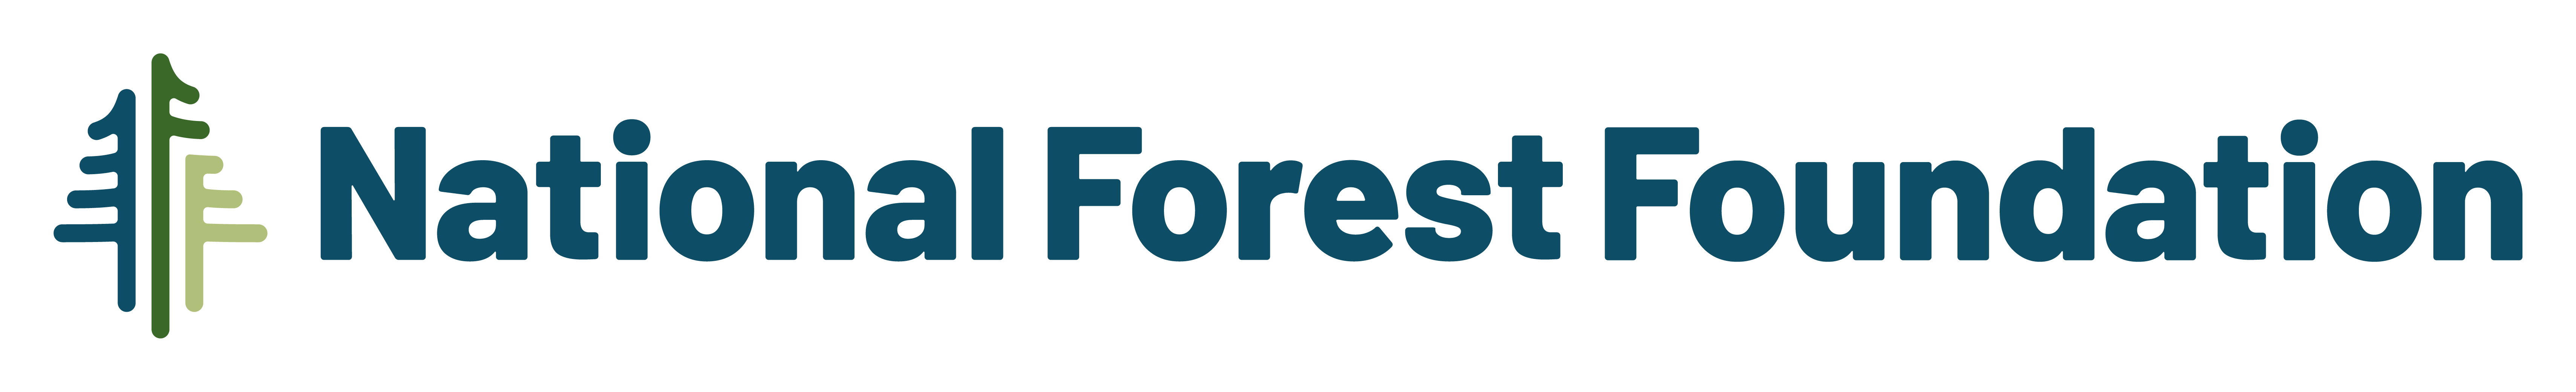 National Forest Foundation logo logo